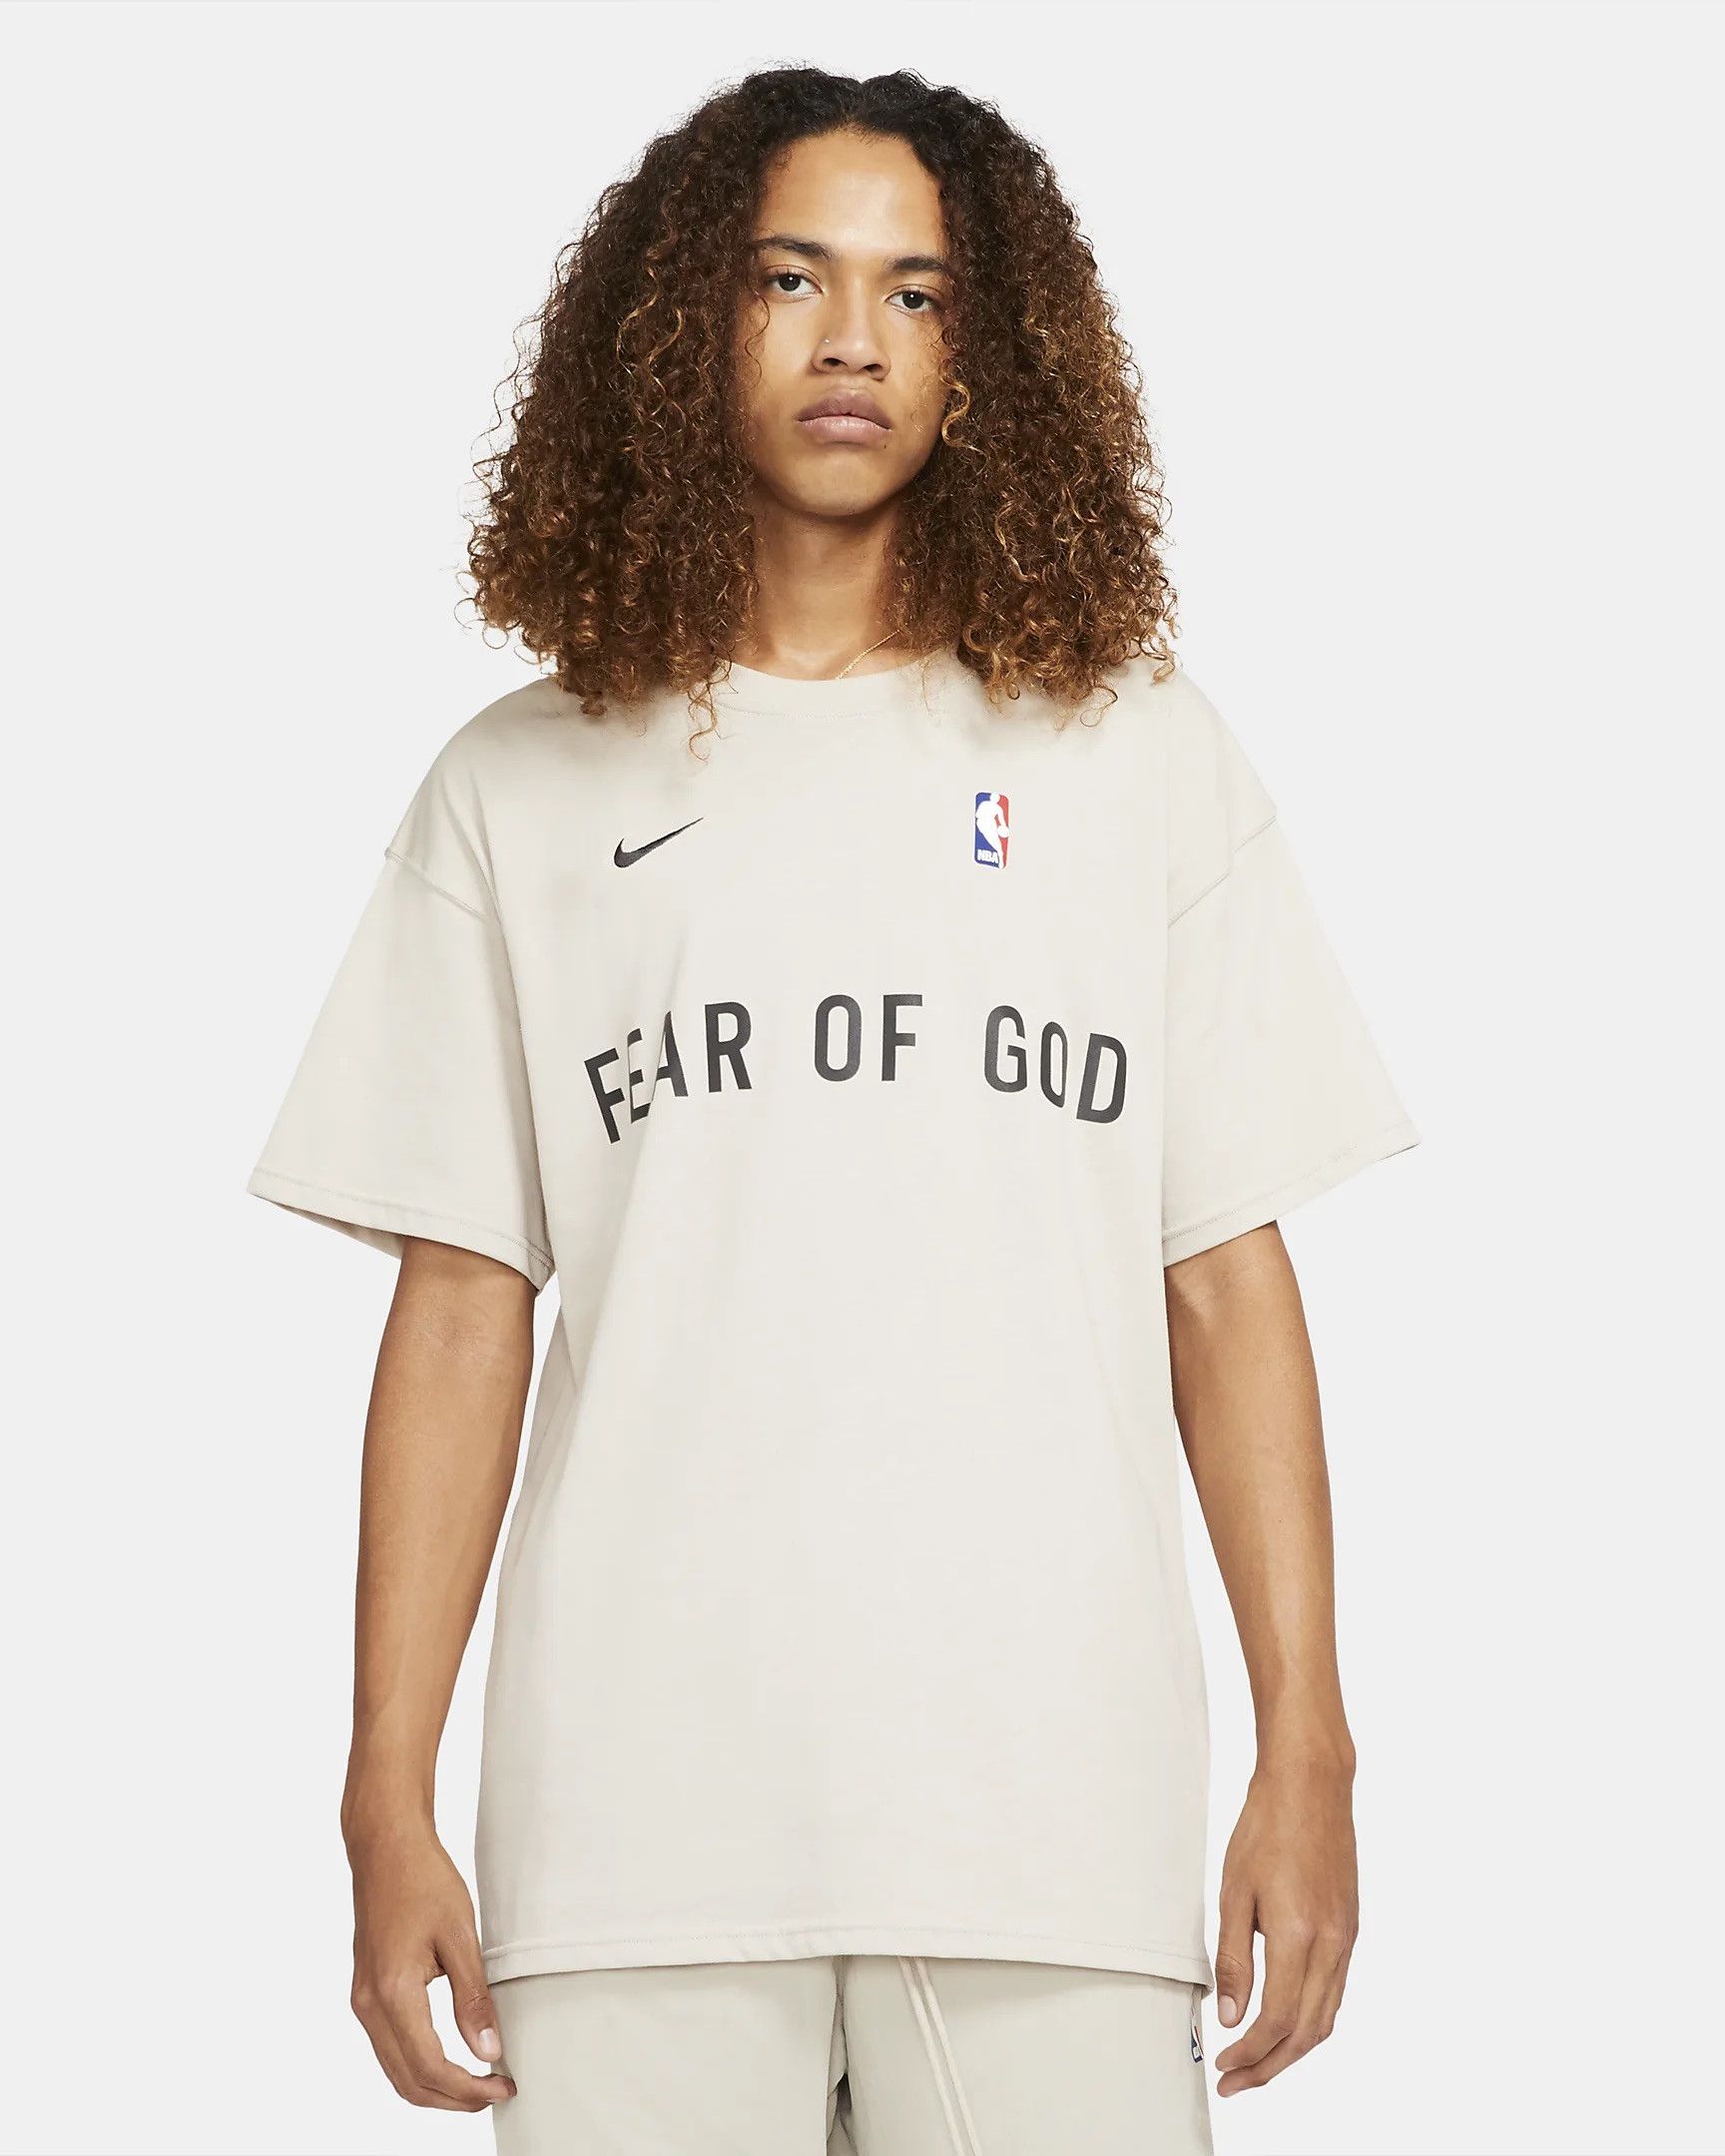 Fear Of God X Nike T Shirt | Grailed